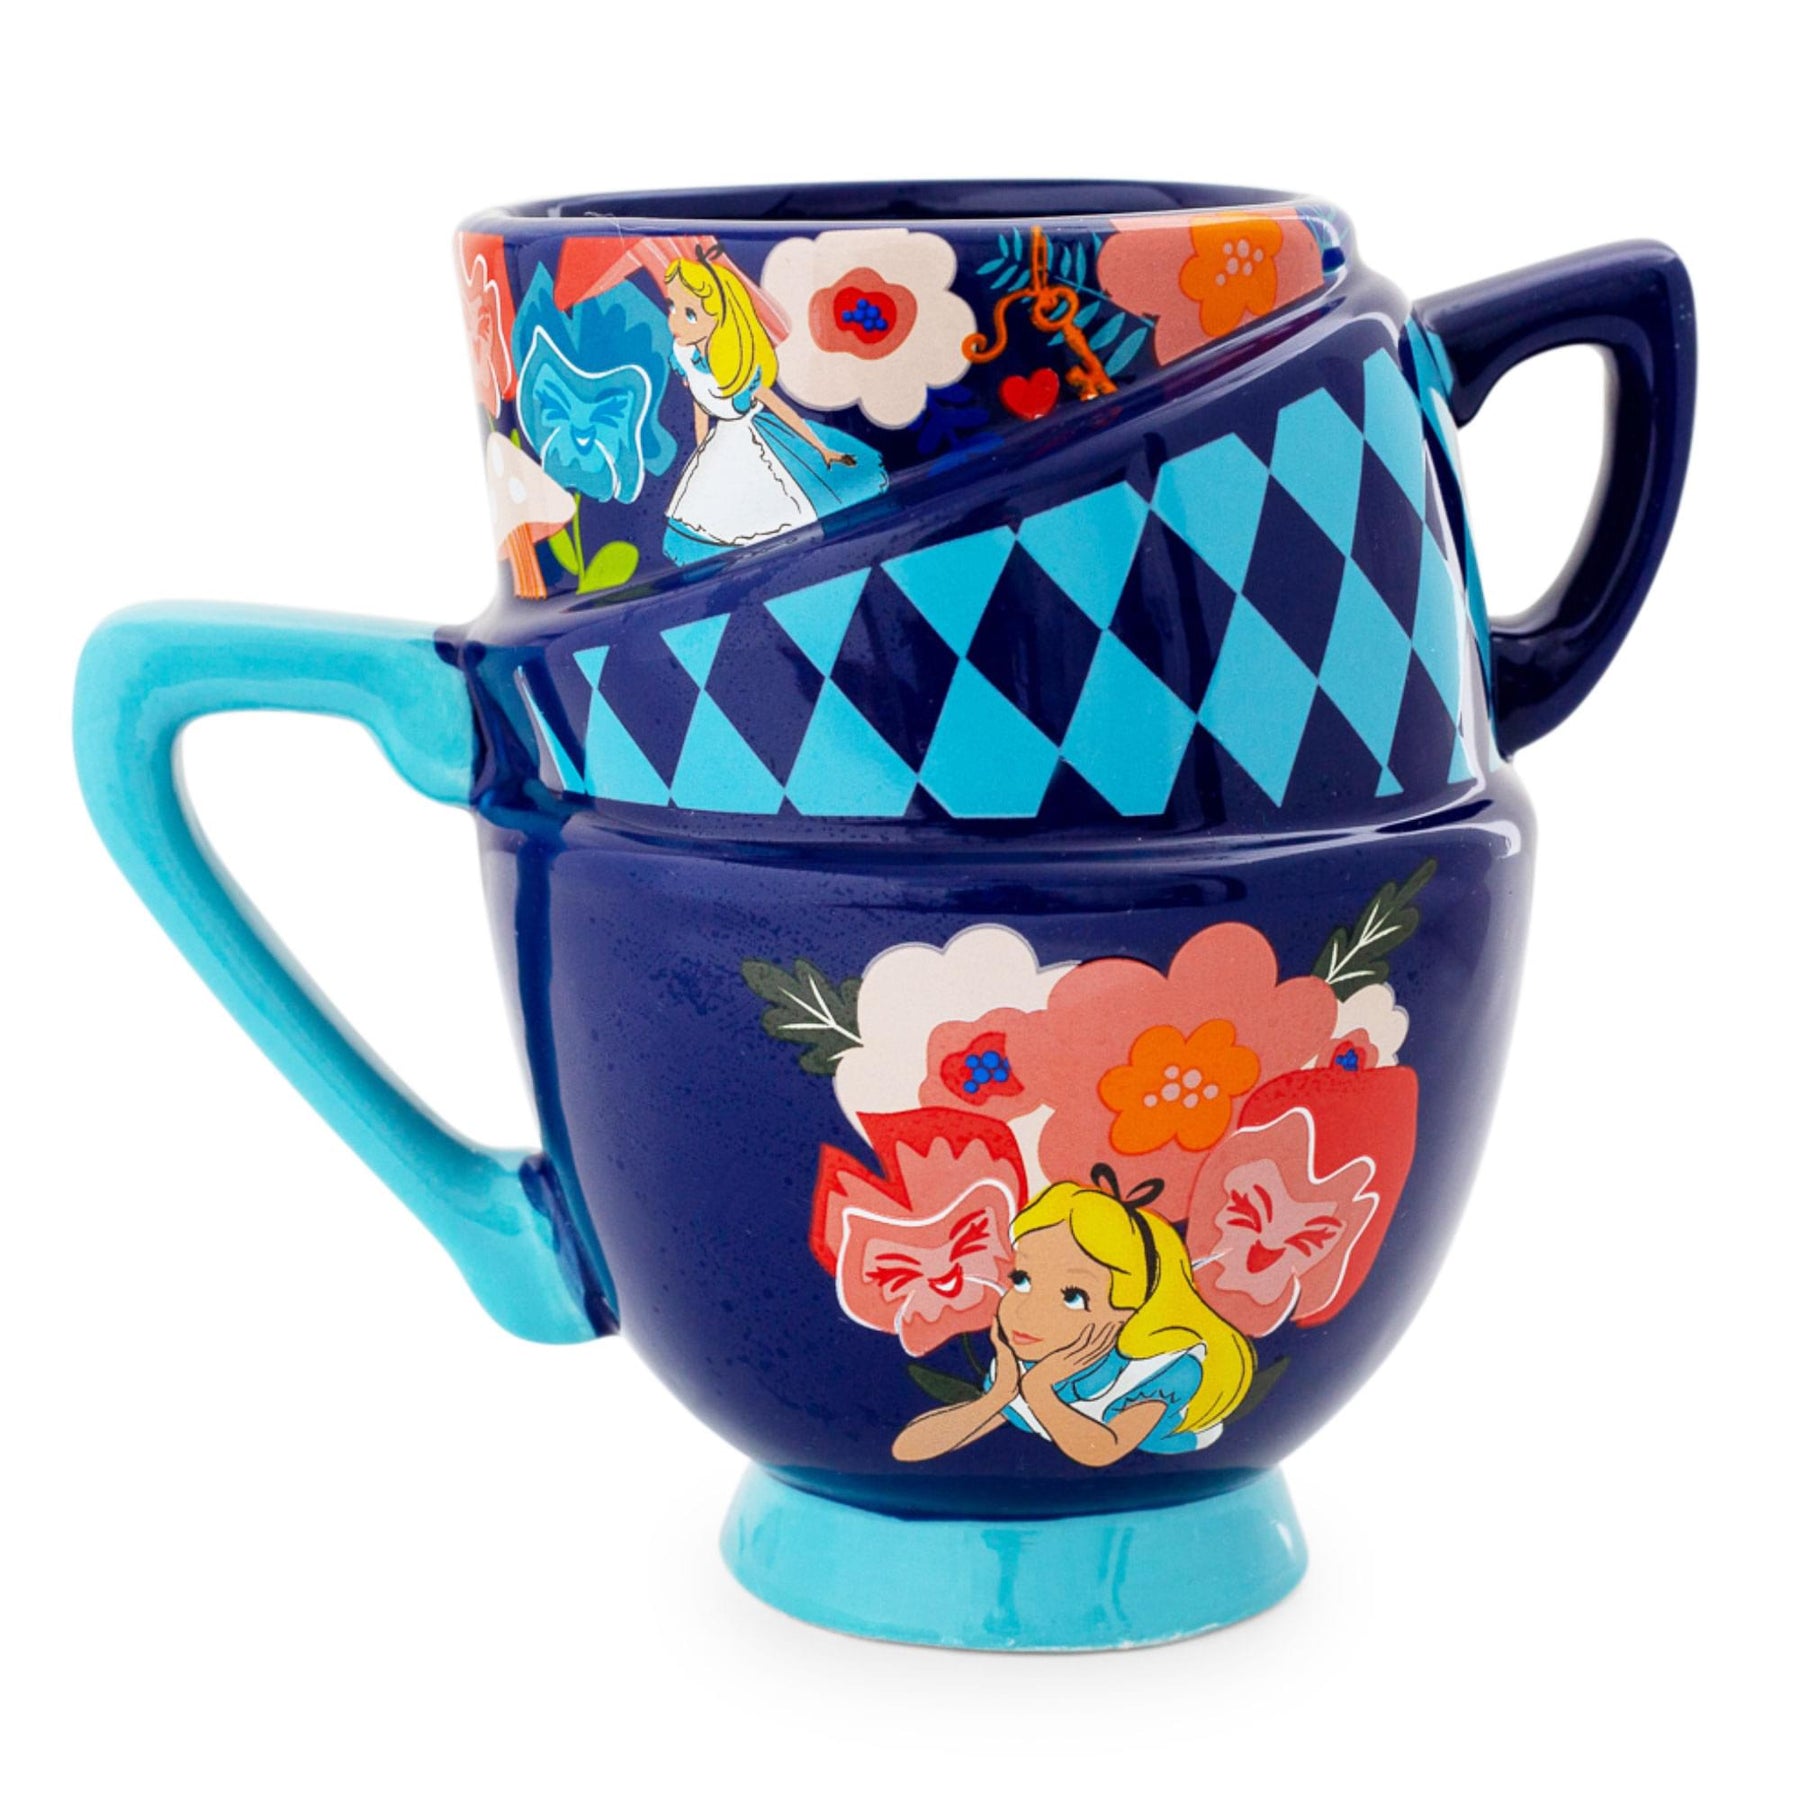 Disney Alice in Wonderland Stacked Teacups Sculpted Ceramic Mug | Holds 20 Ounce